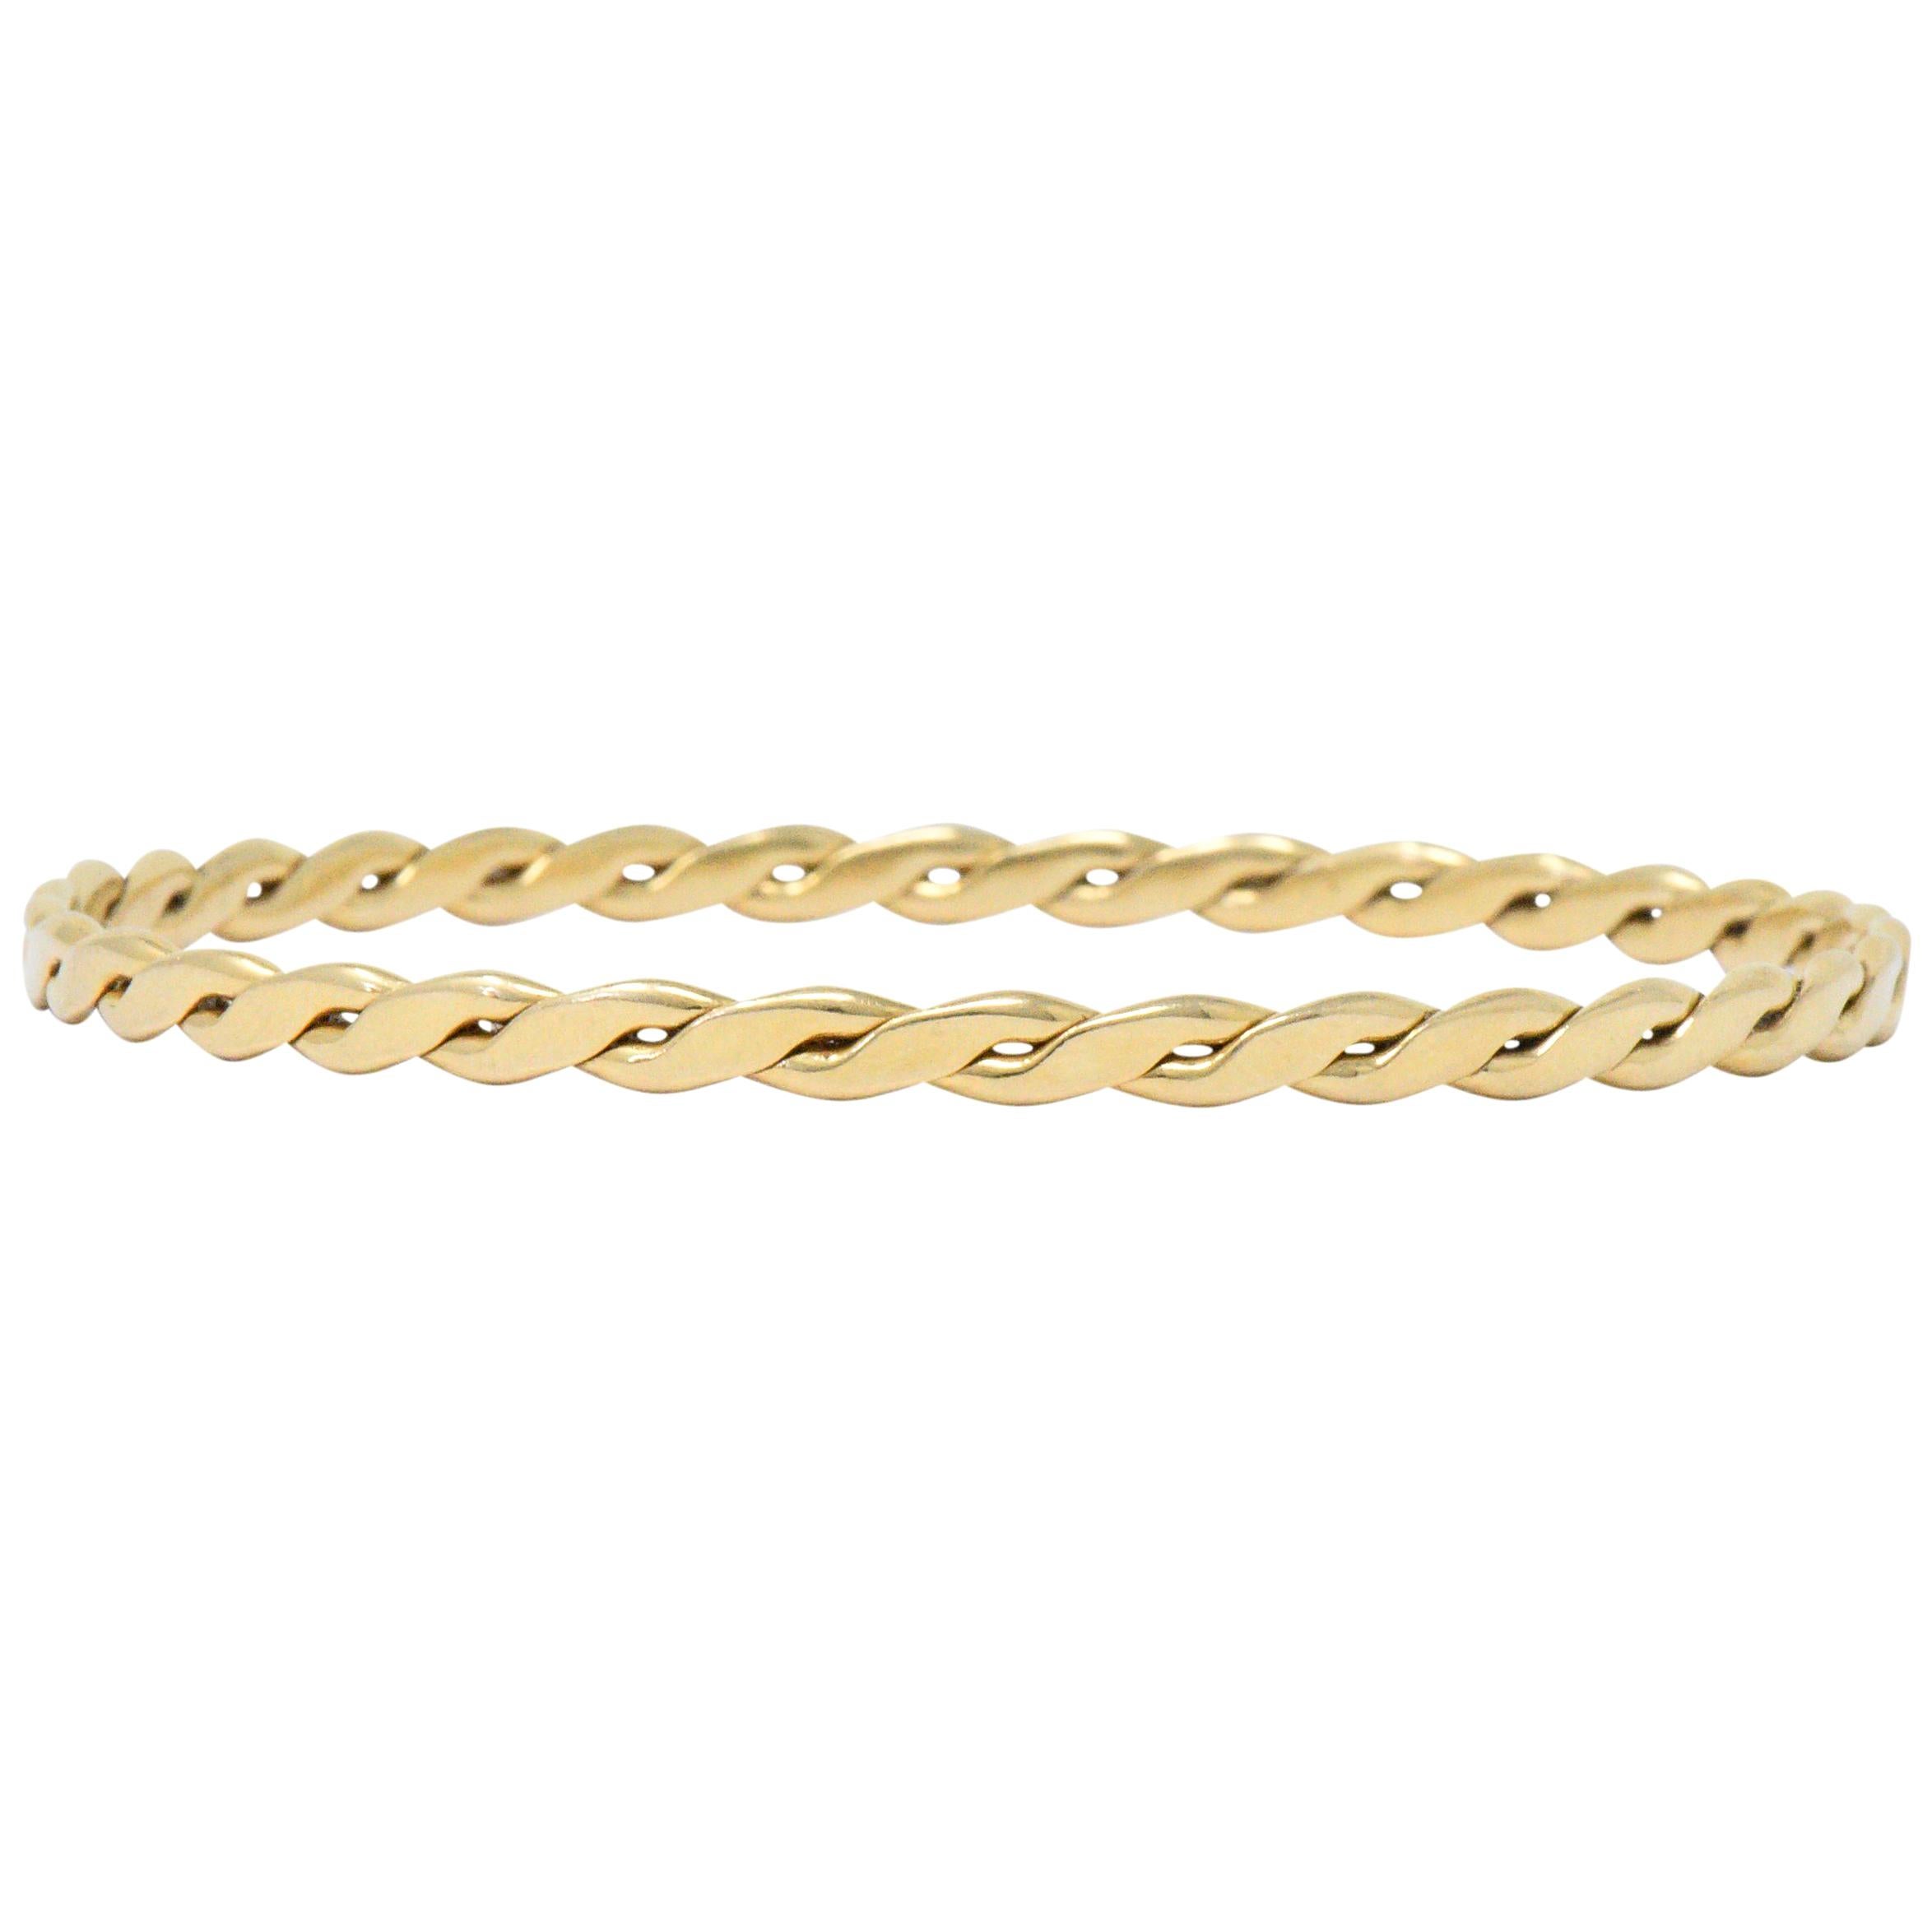 Tiffany & Co. Stackable 14 Karat Gold Entwined Bangle Bracelet